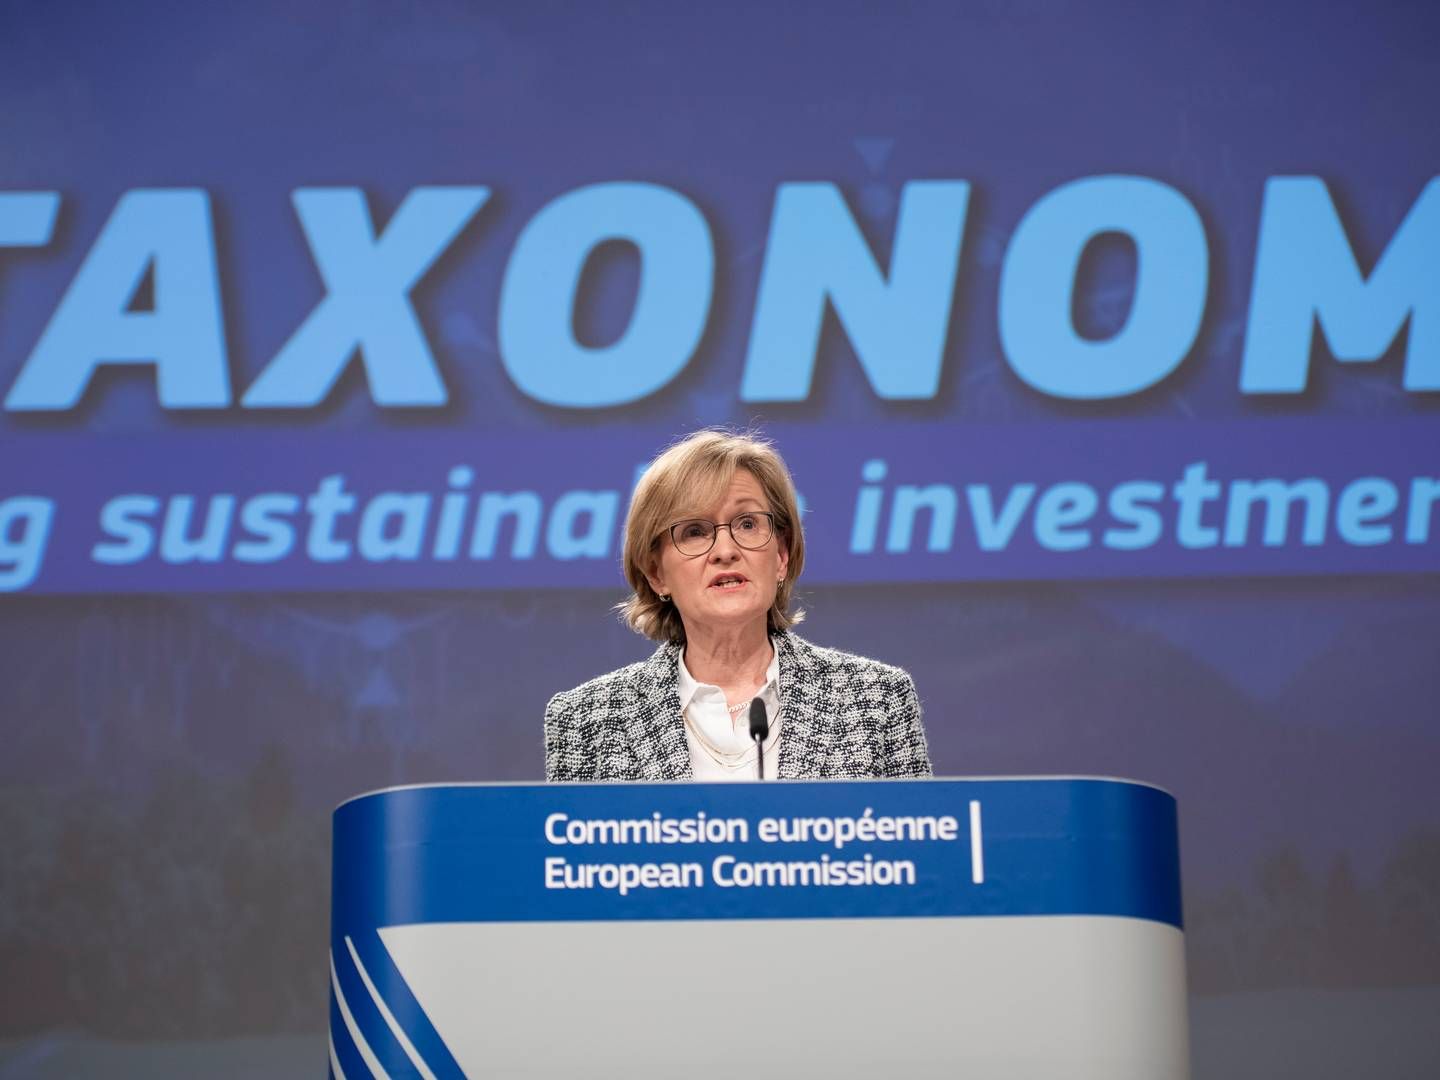 Mairead McGuinness er EU-kommissær for finansielle services. | Foto: Lukasz Kobus / European Union